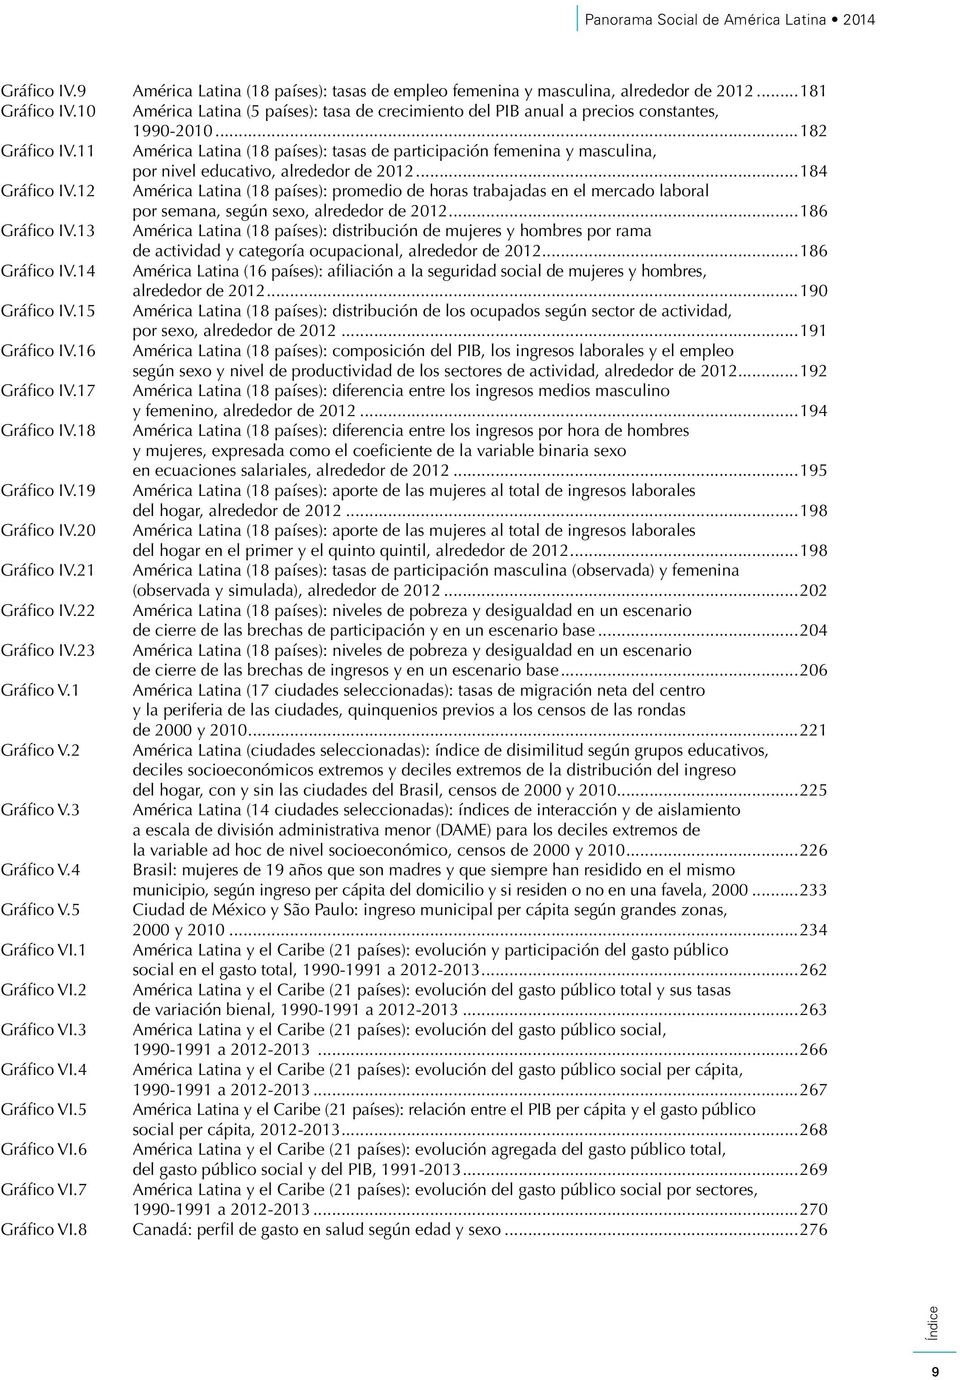 11 Améric Ltin (18 píses): tss de prticipción femenin y msculin, por nivel eductivo, lrededor de 2012...184 Gráfico IV.